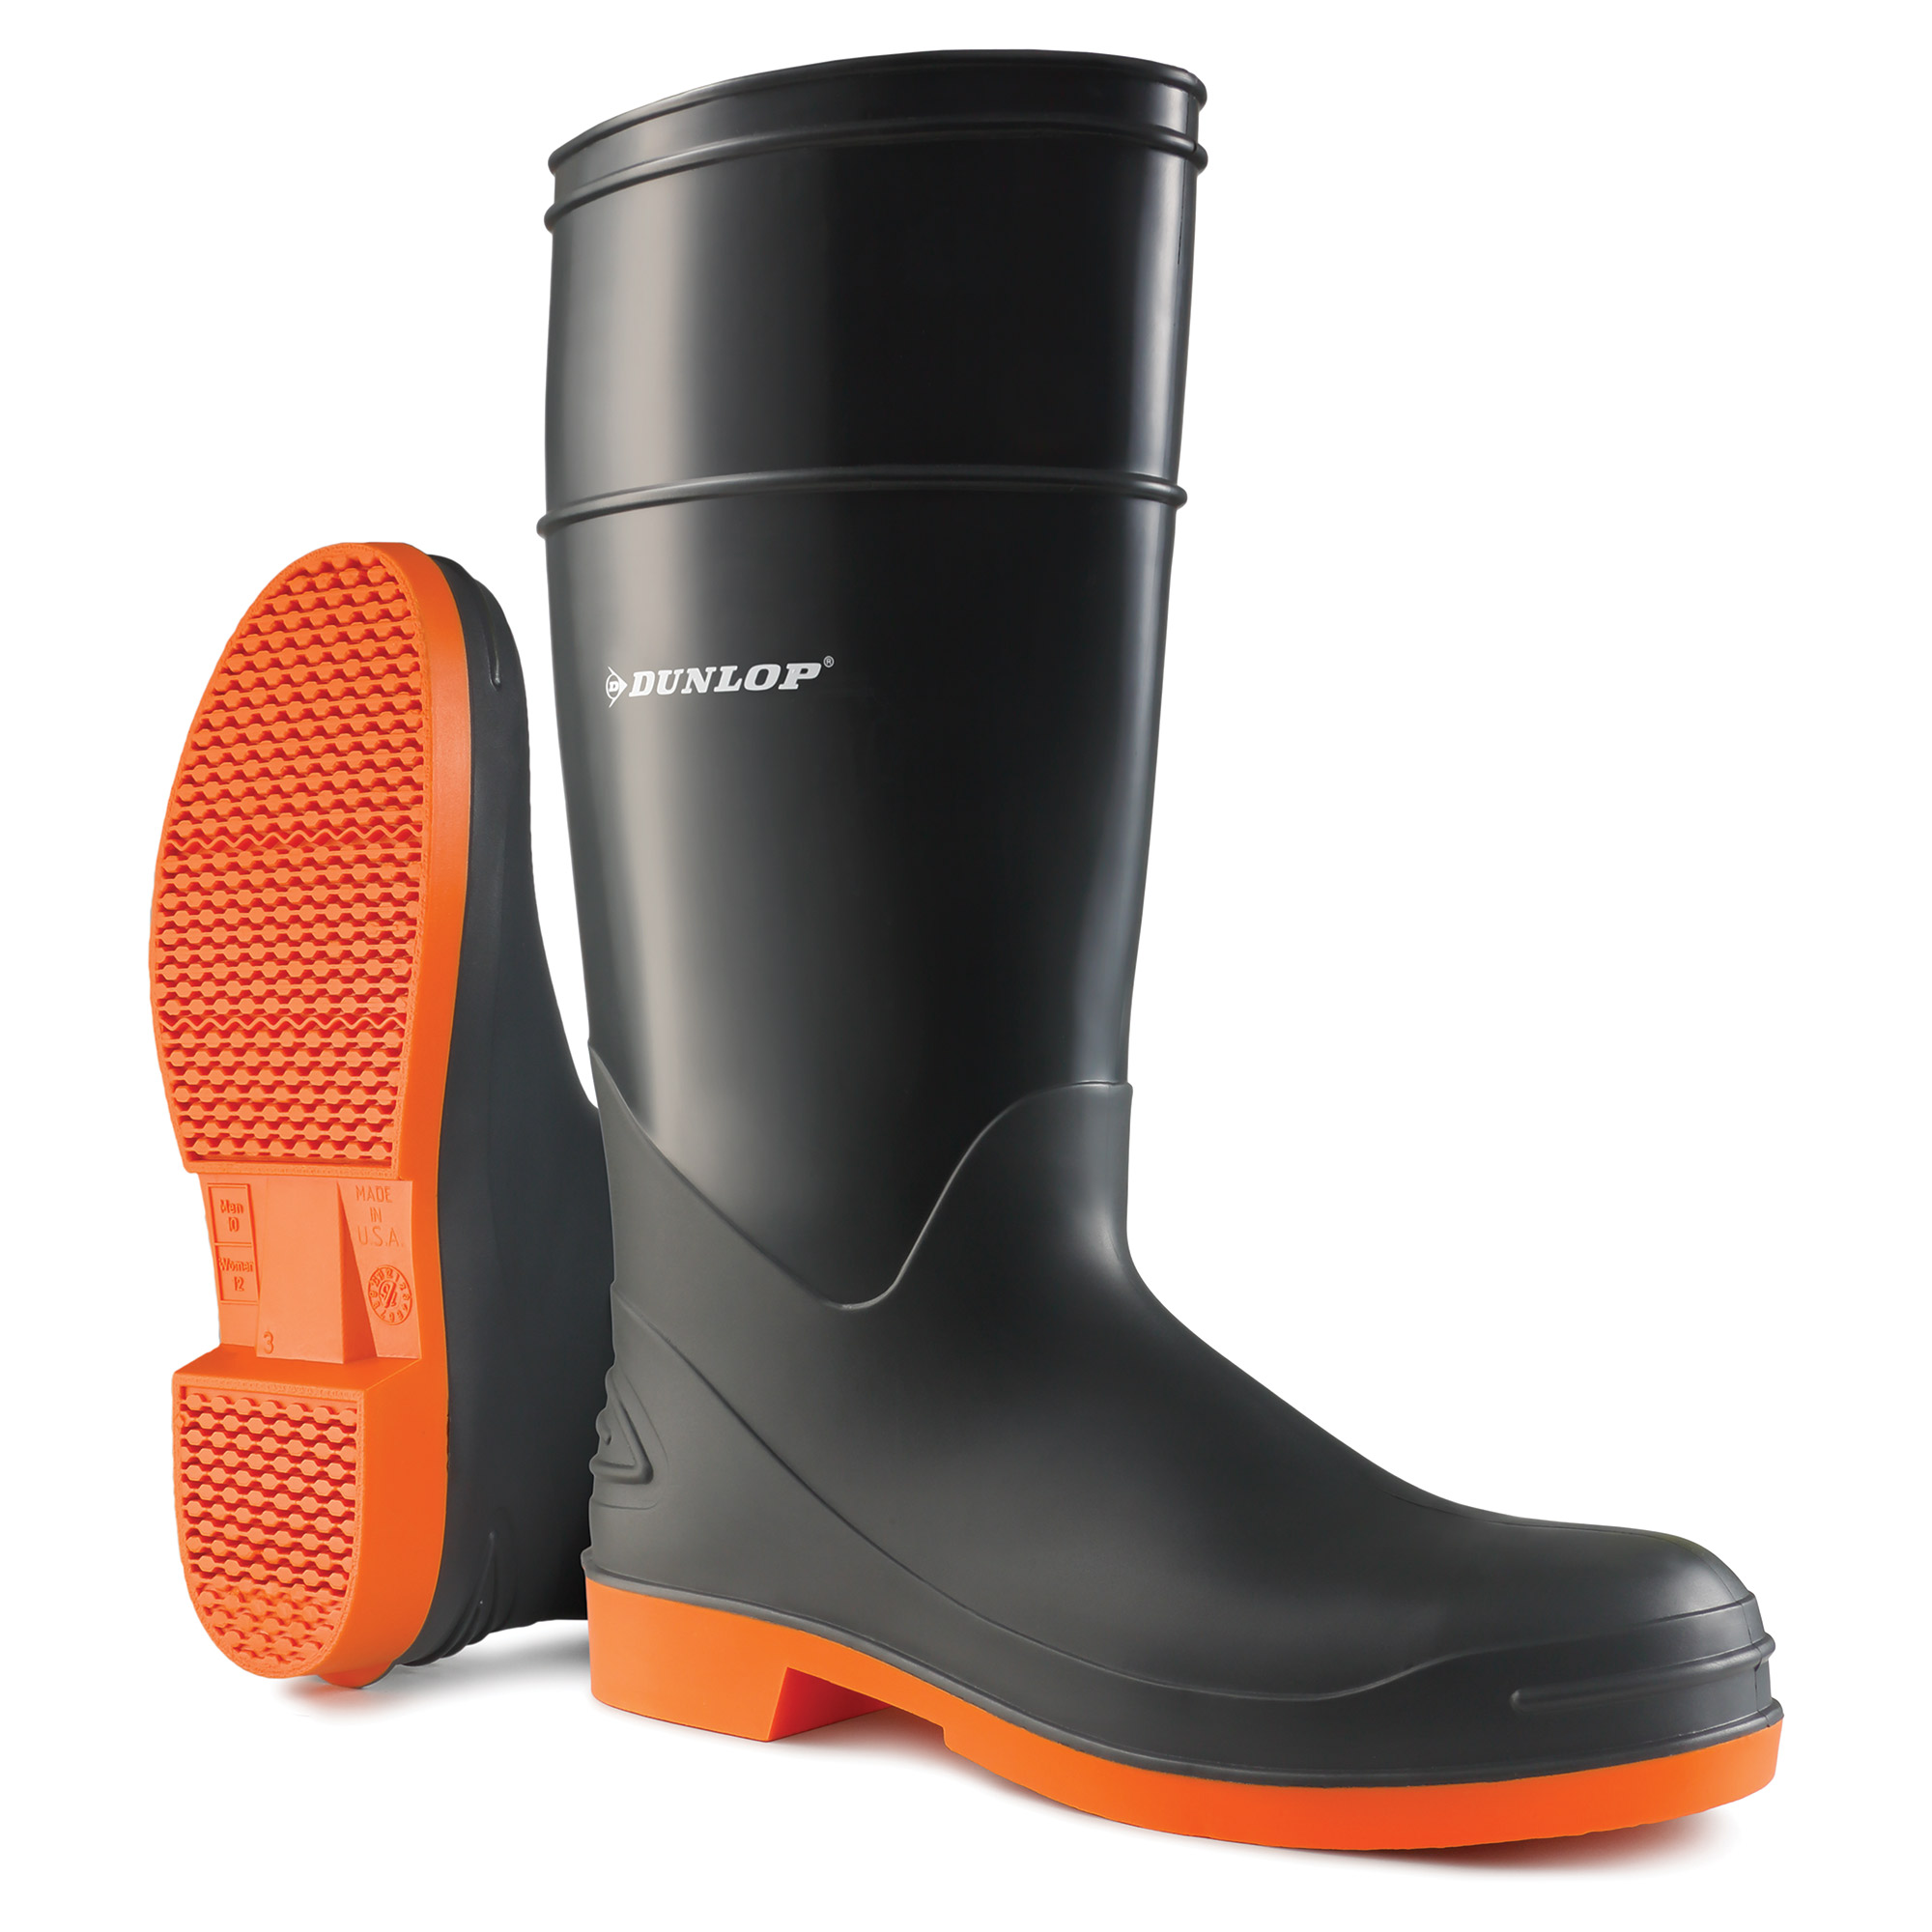 orange dunlop boots